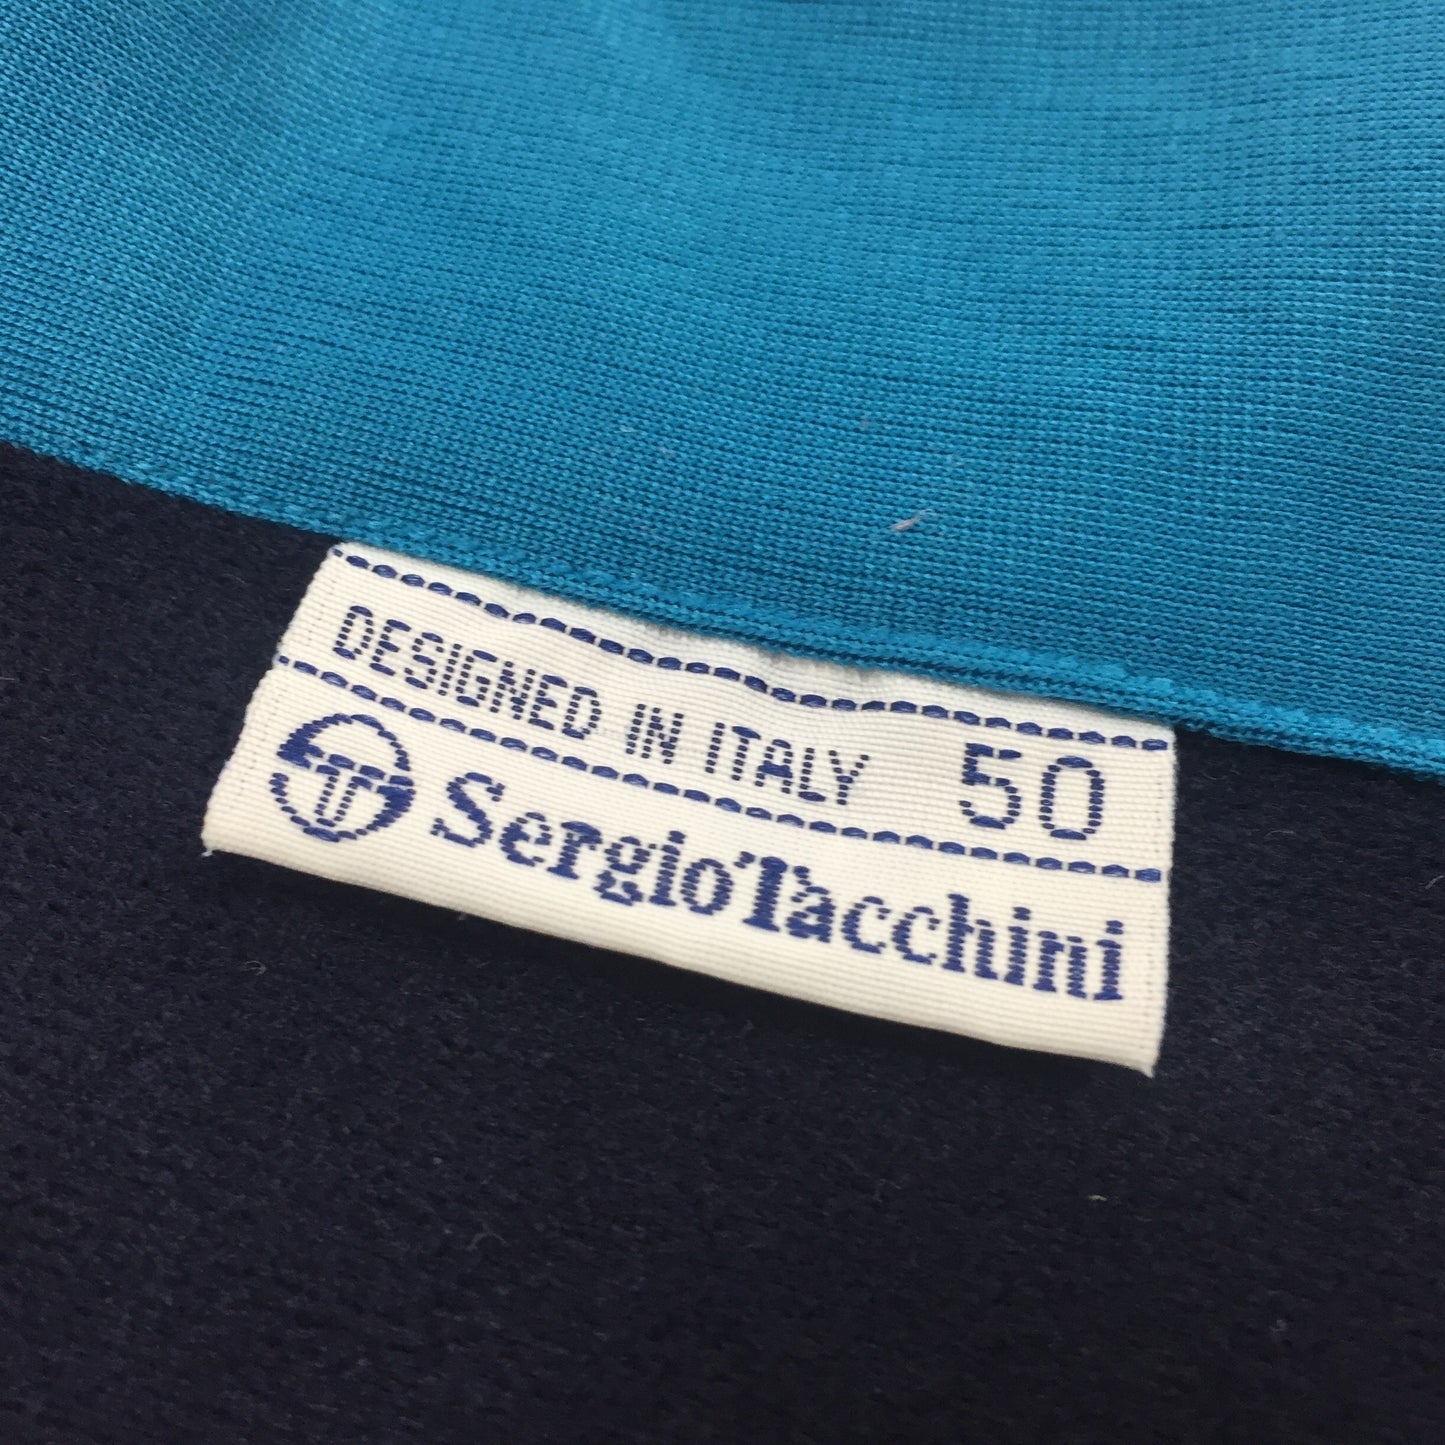 0518 Sergio Tacchini 90s Vintage Tennis Tracktop